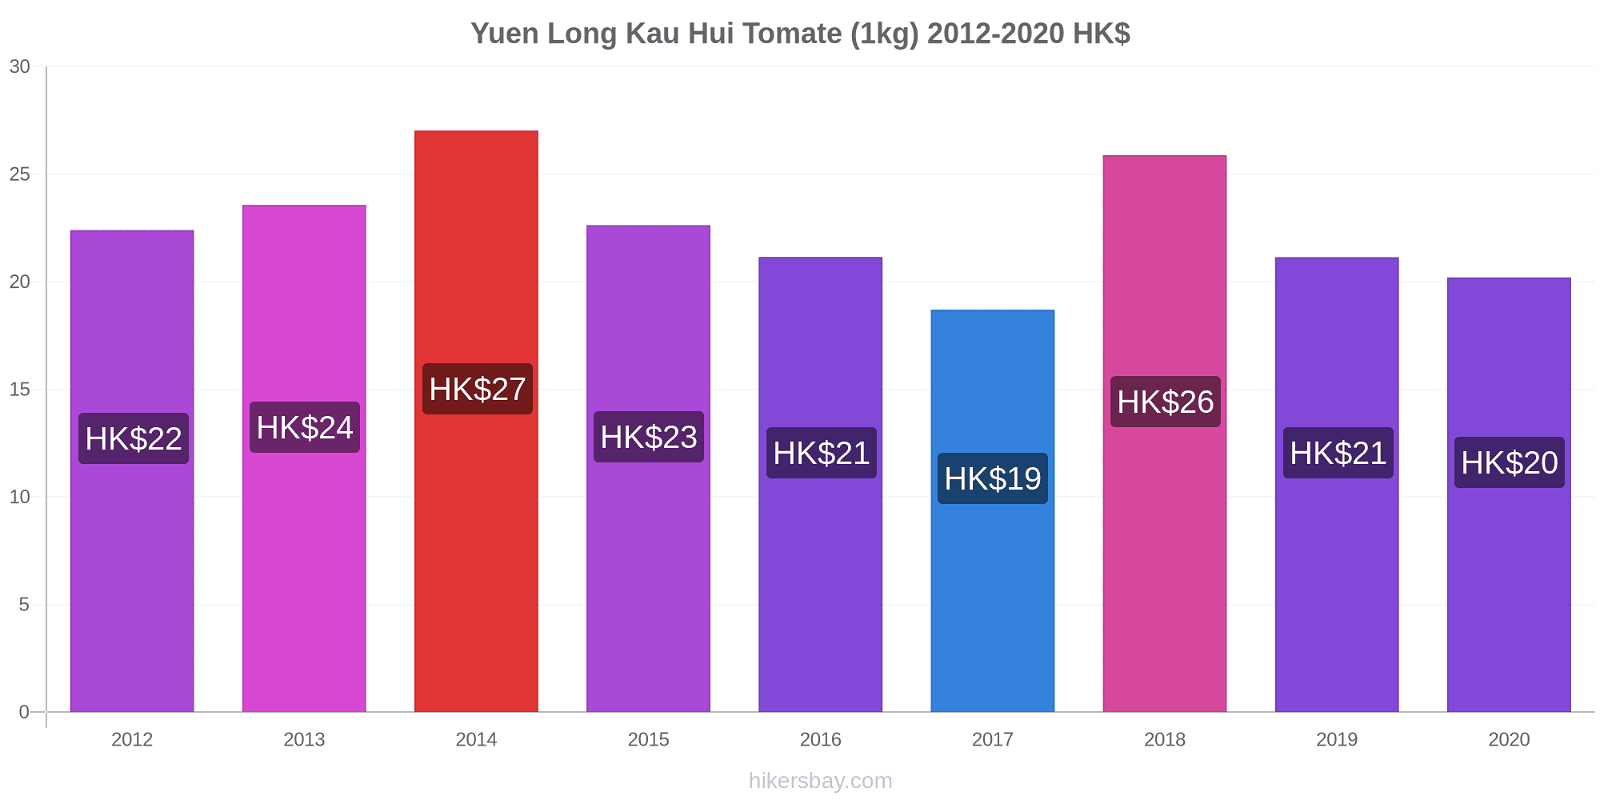 Yuen Long Kau Hui cambios de precios Tomate (1kg) hikersbay.com